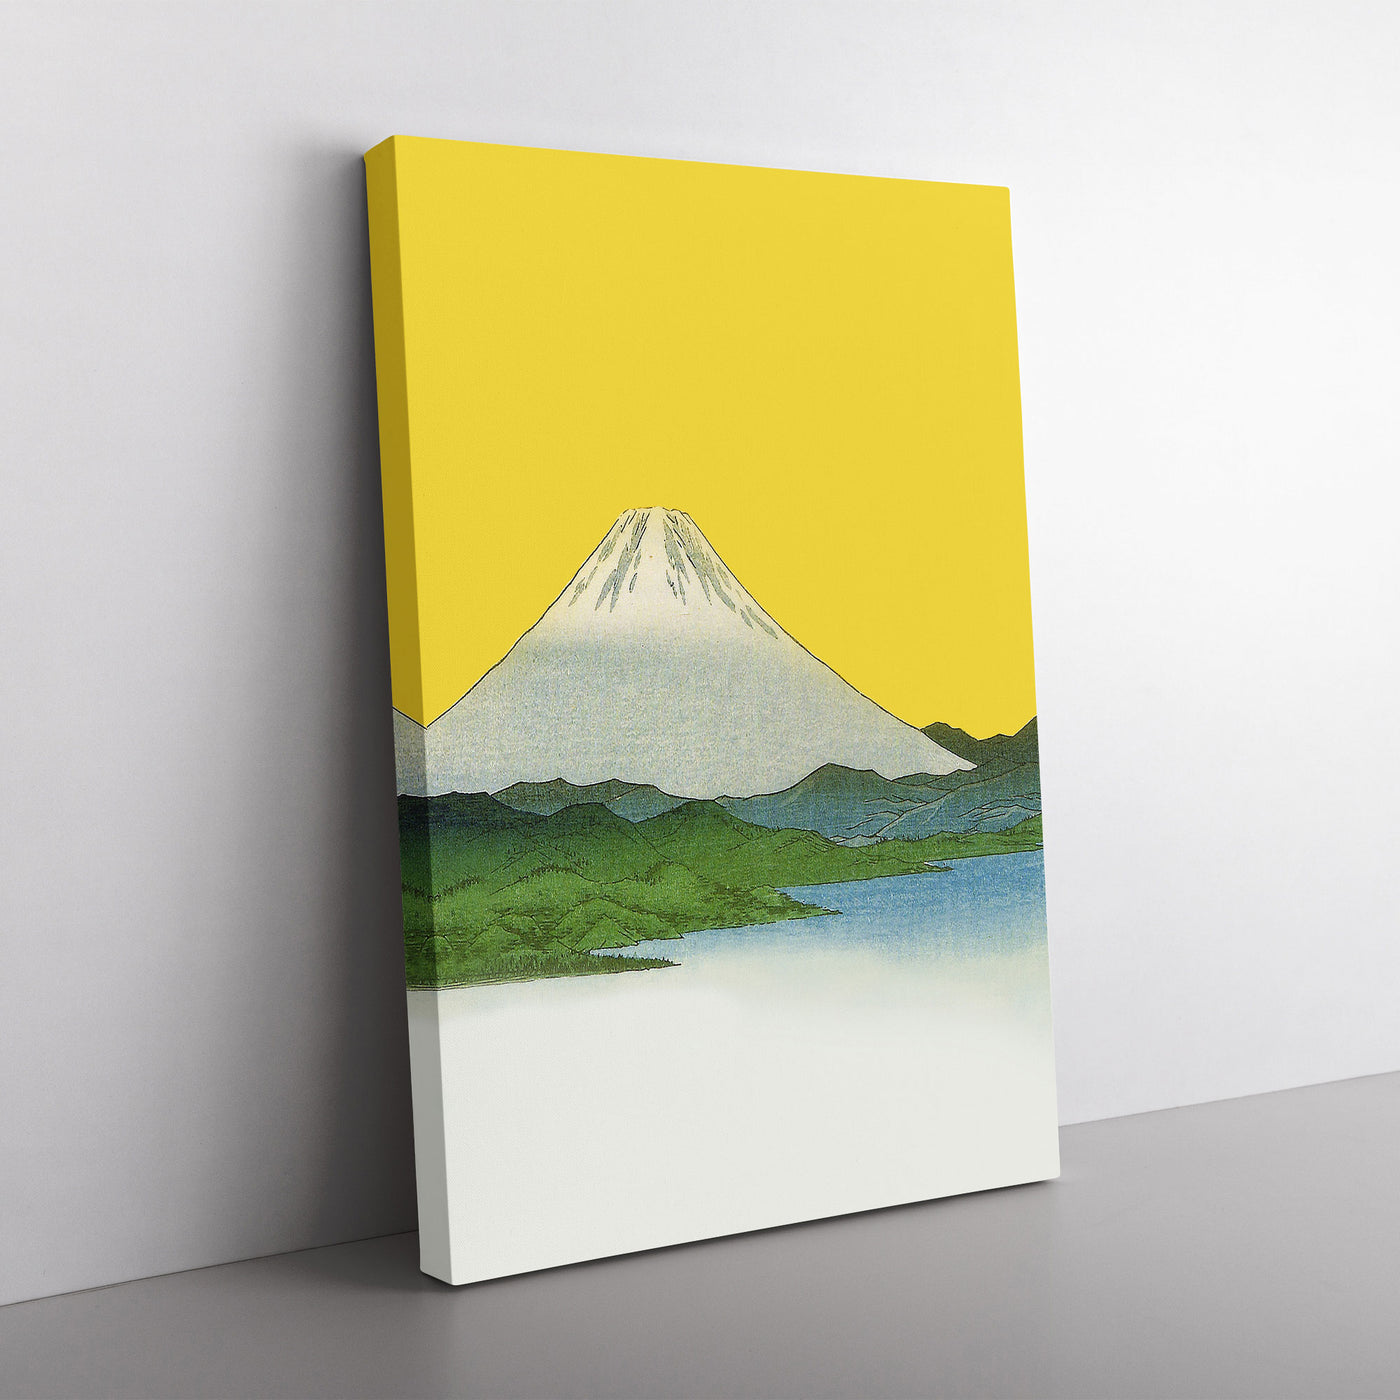 Mount Fuji V2